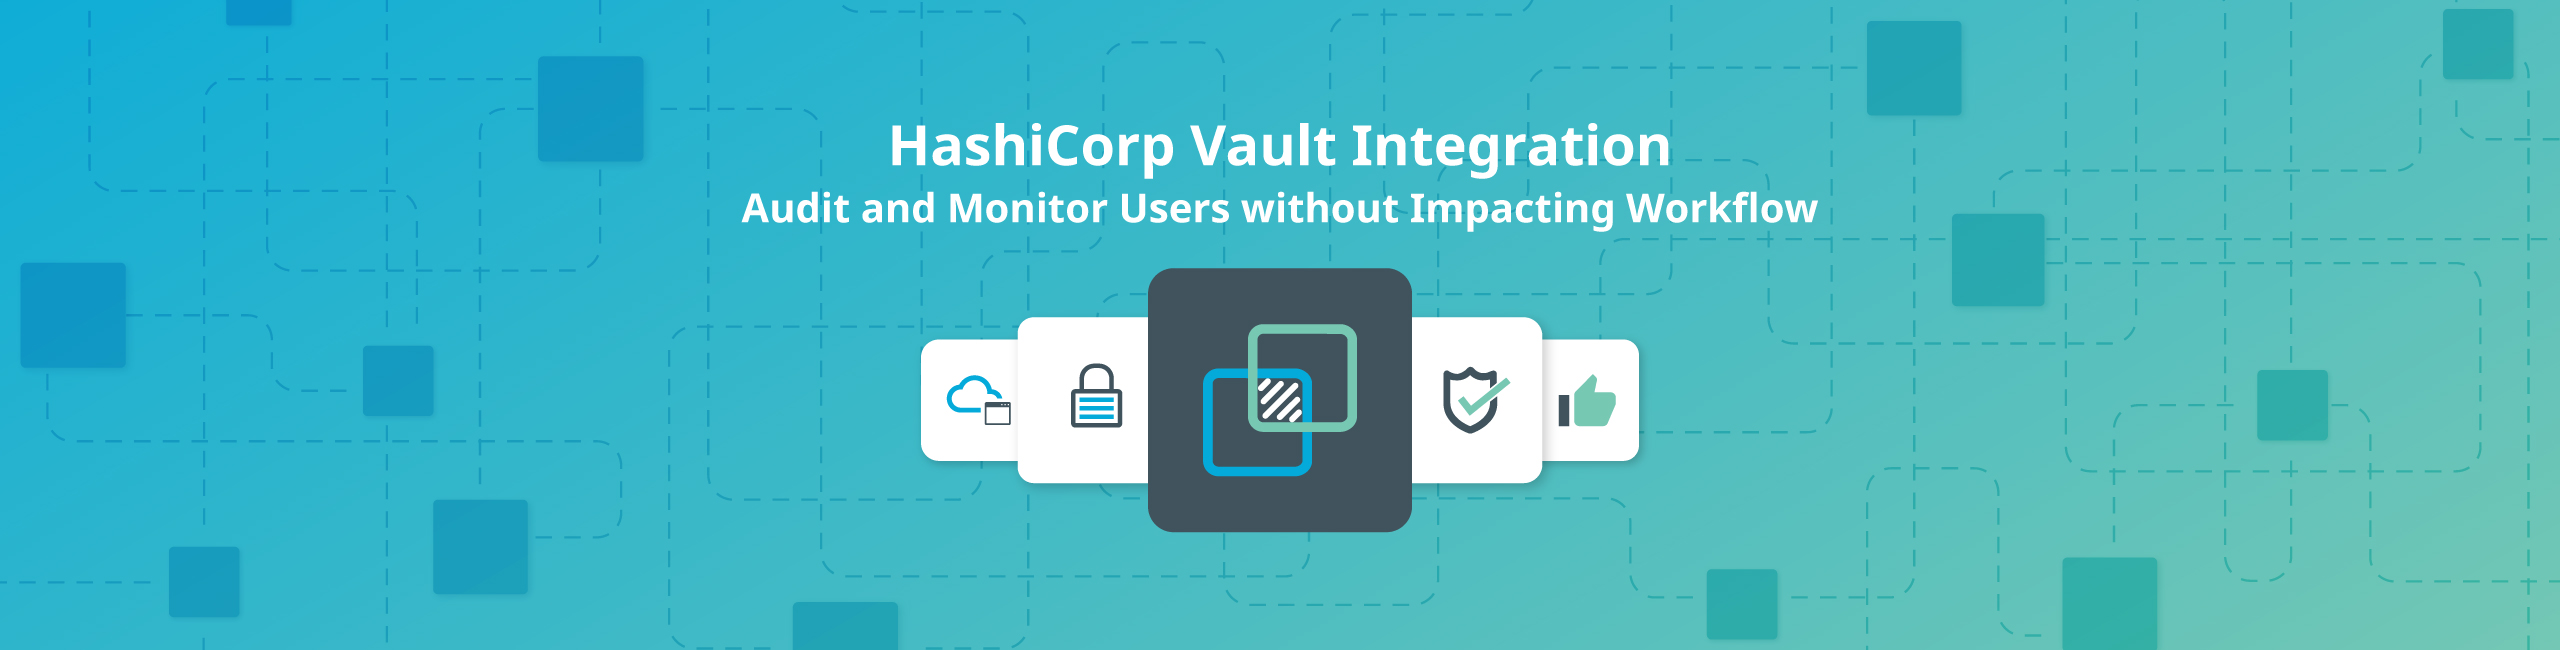 HashiCorp Vault Integration